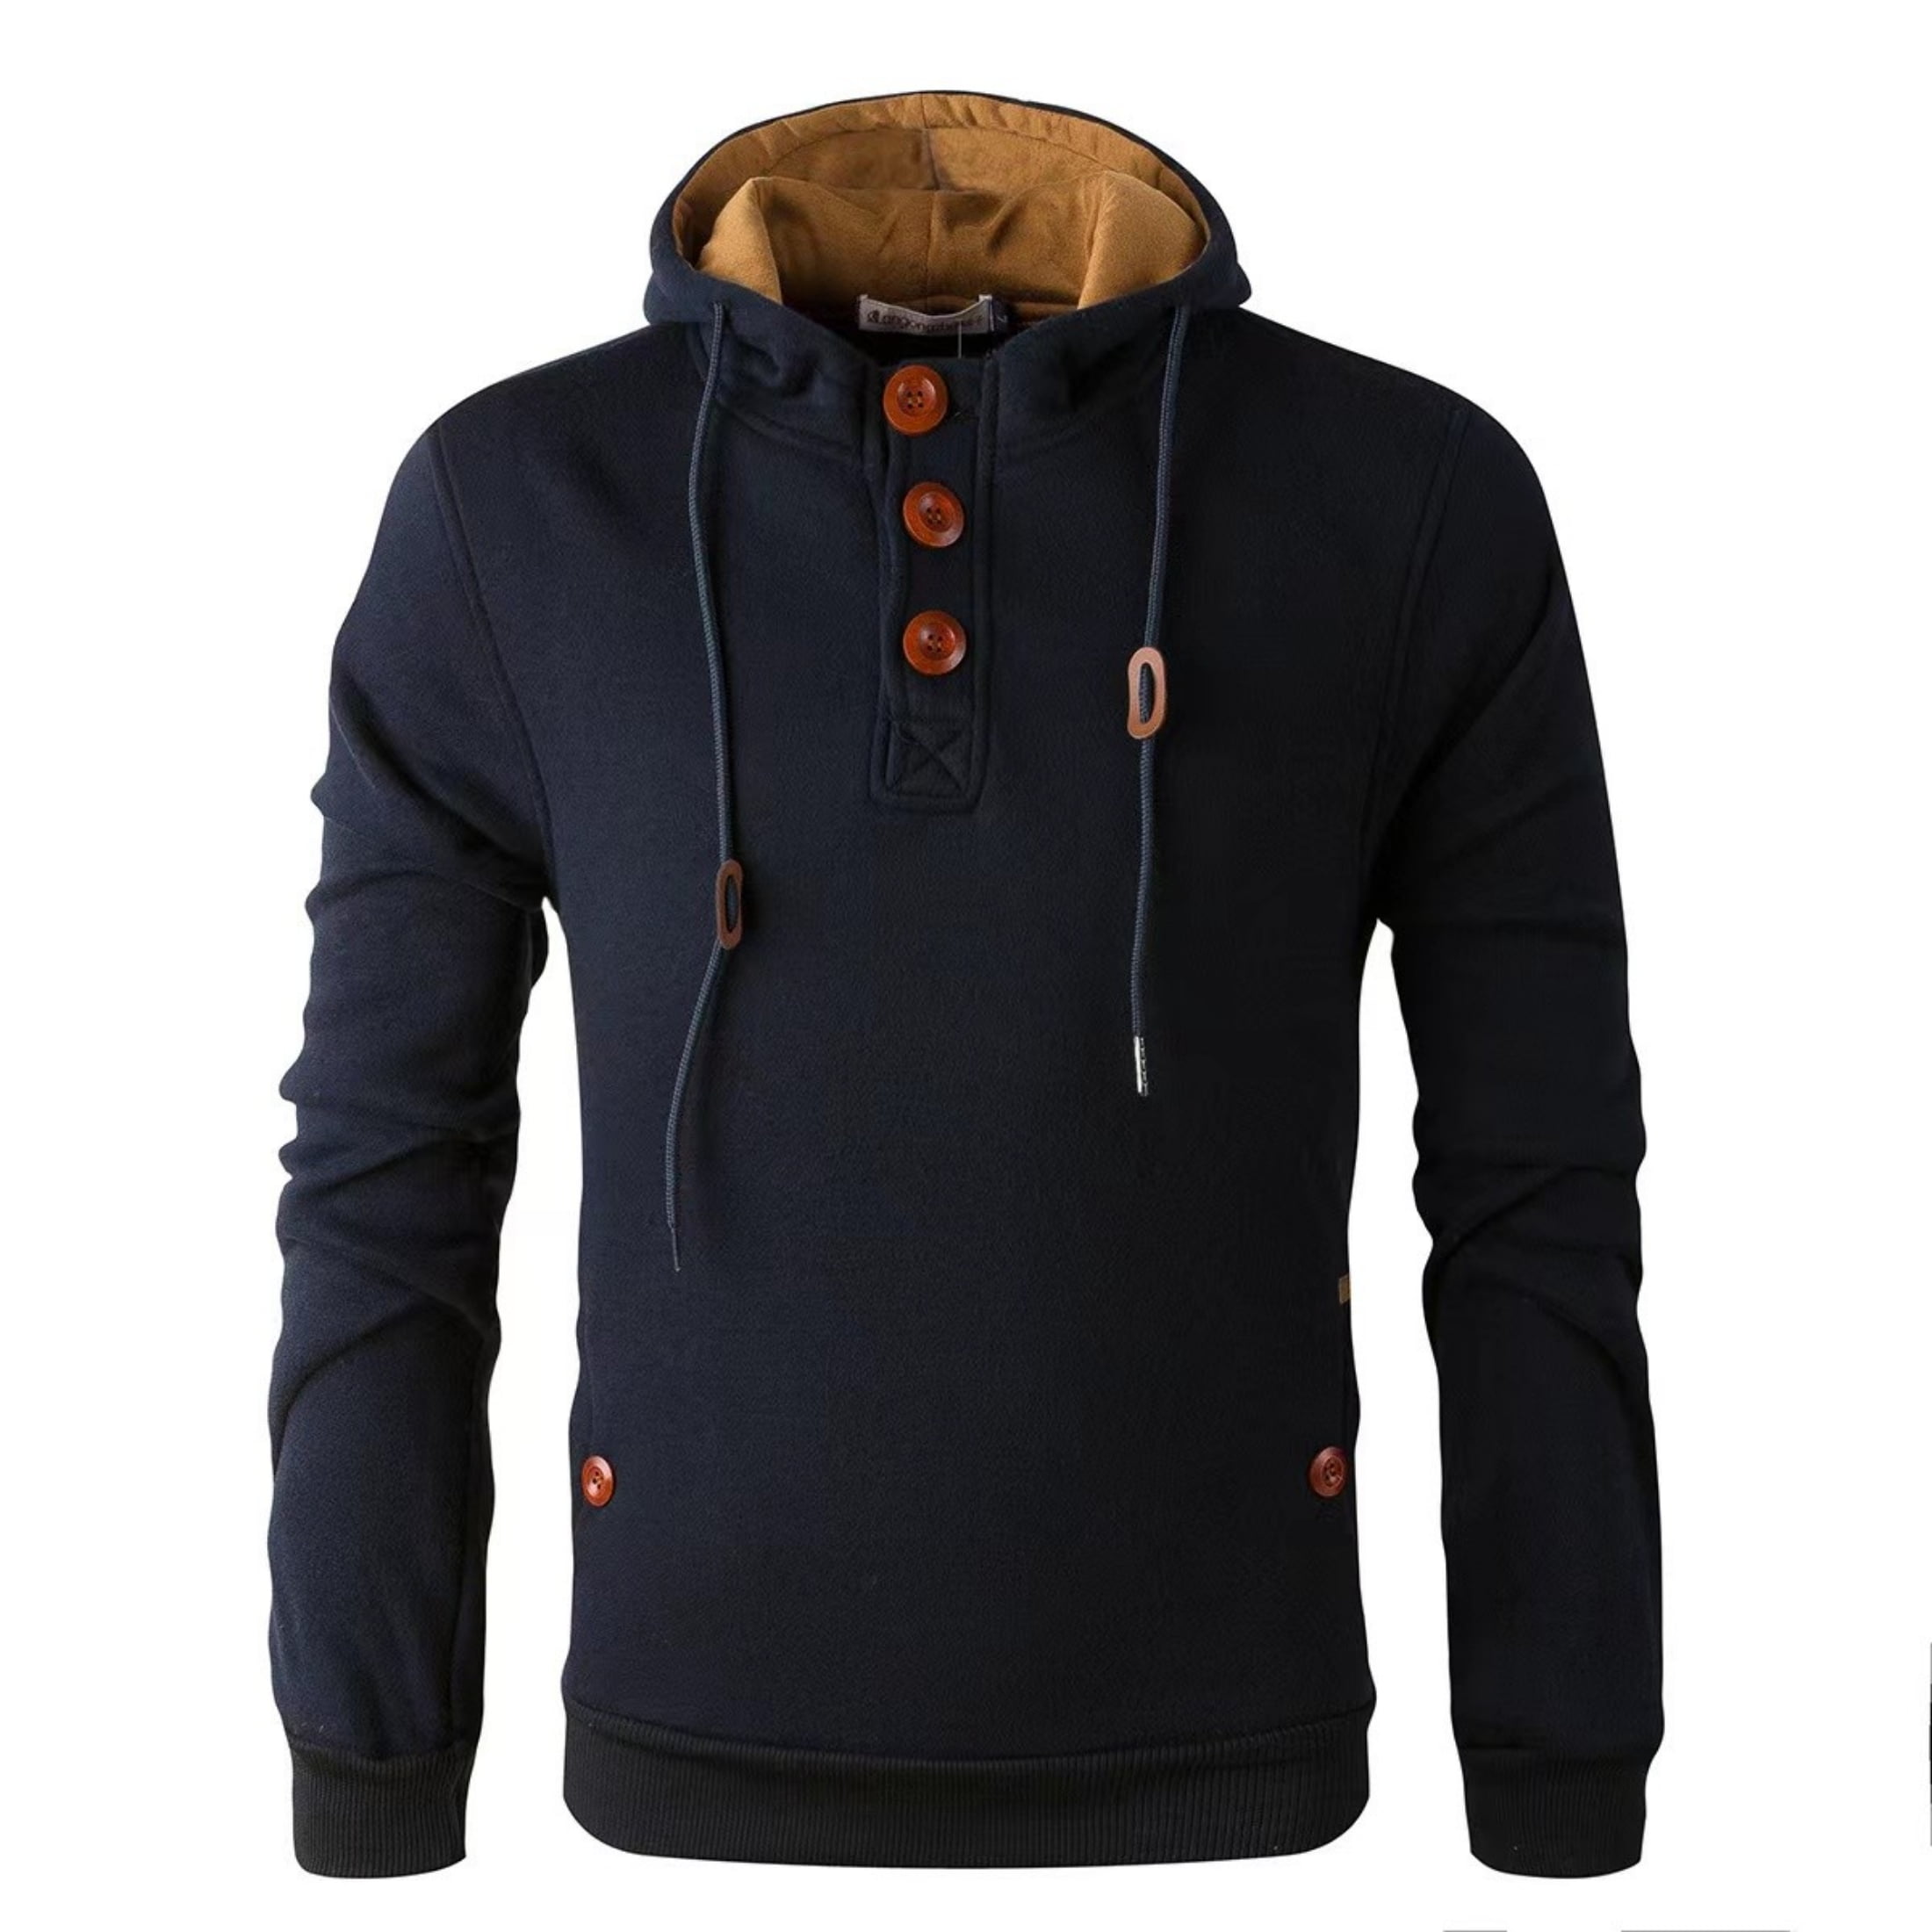 YuKaiChen Men's Fleece Hoodie Button-up Jacket Hooded Sweatshirt black ...